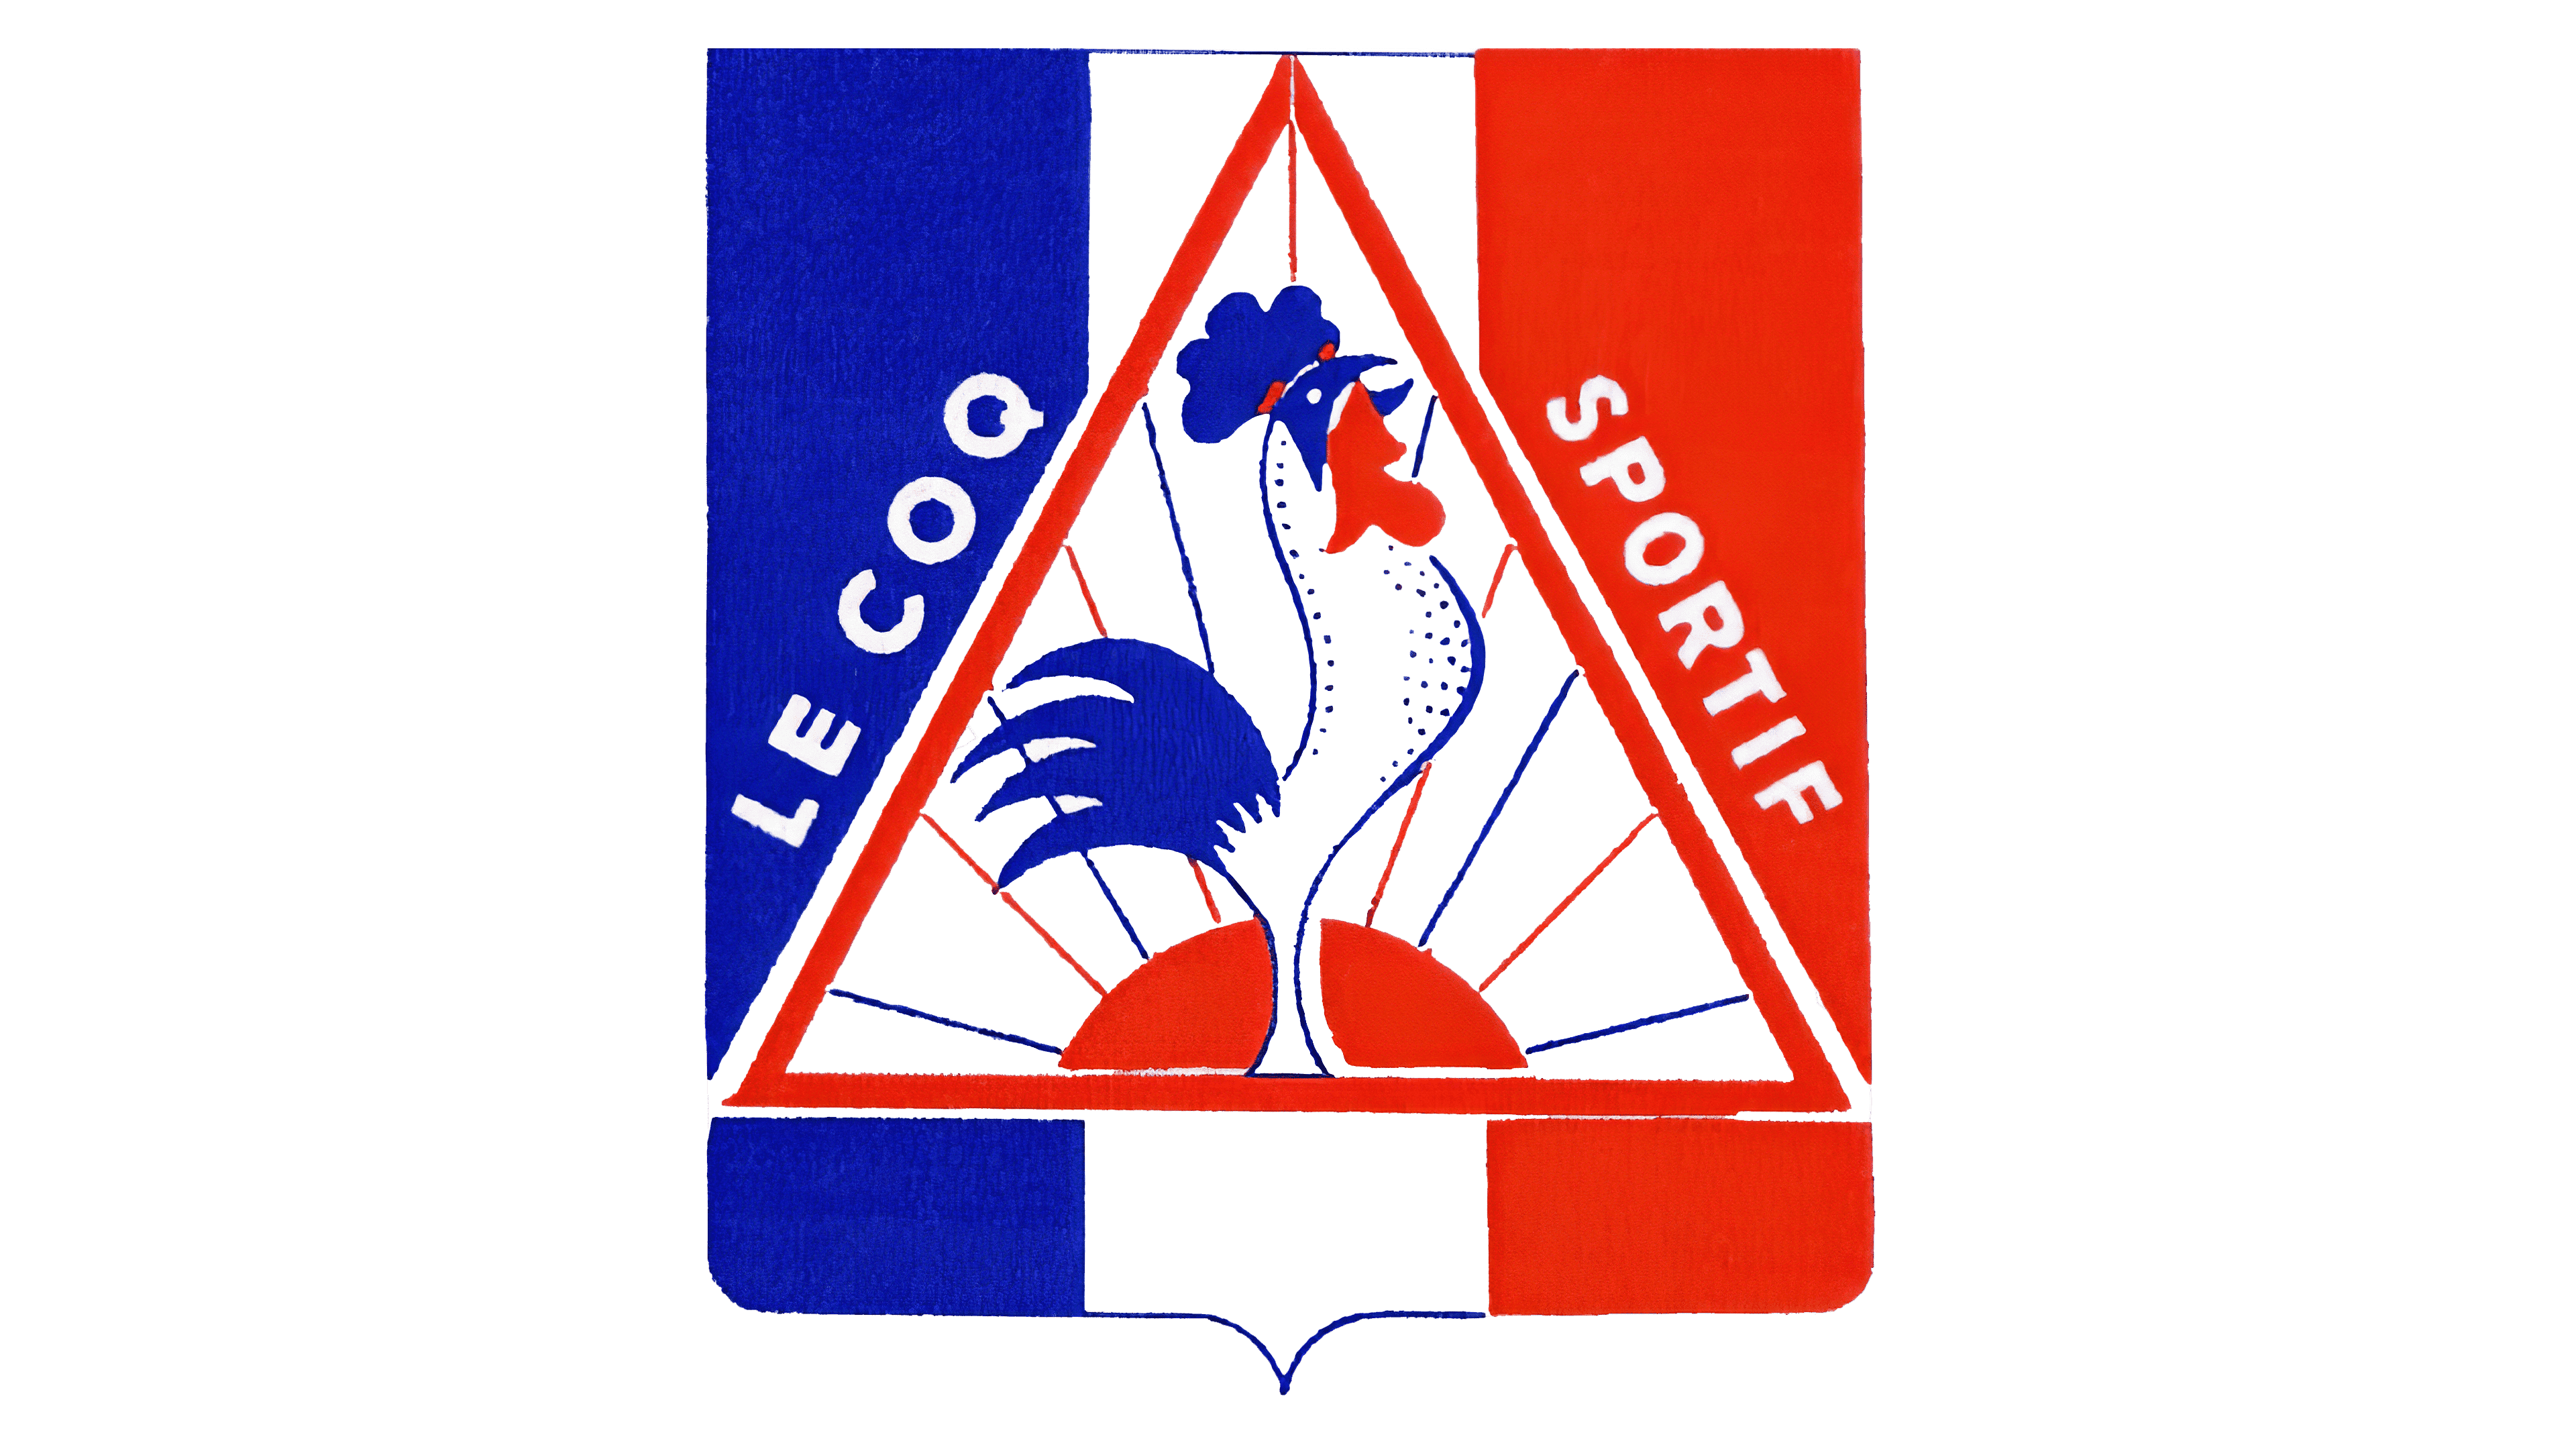 Le Coq Sportif Logos | tyello.com